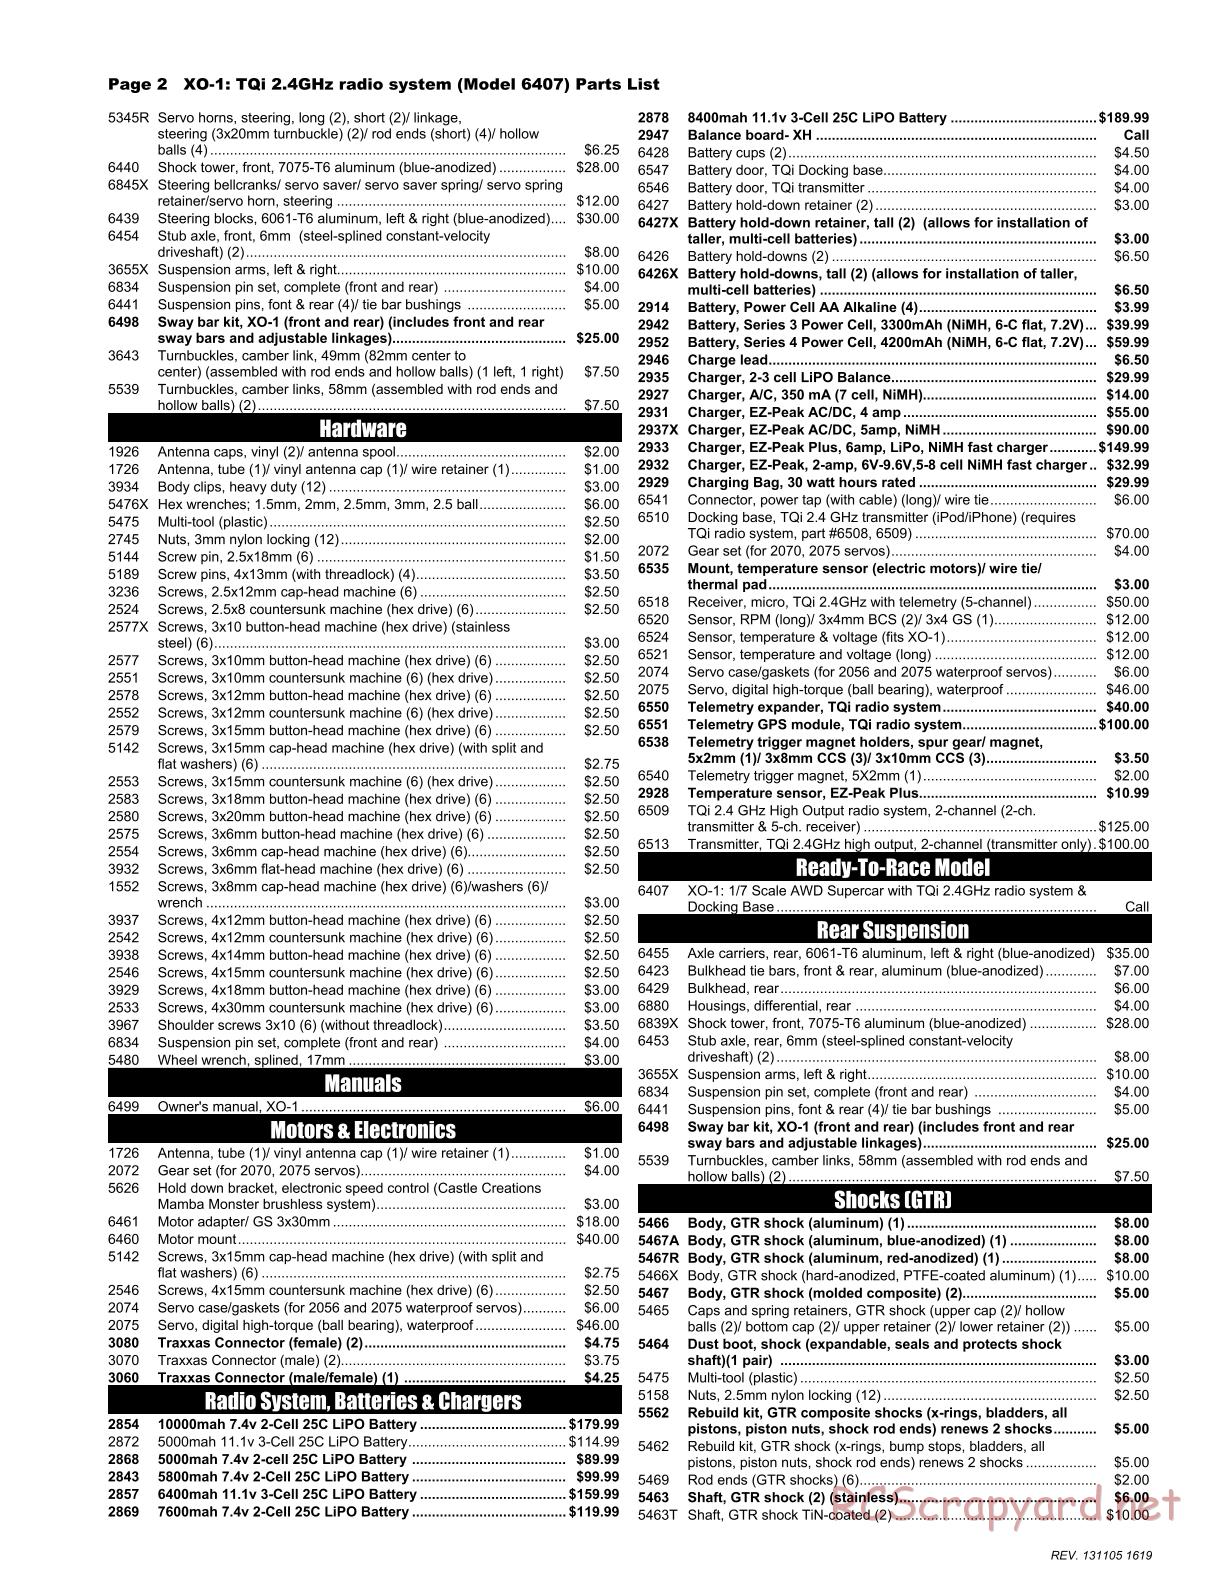 Traxxas - XO-1 (2011) - Parts List - Page 2